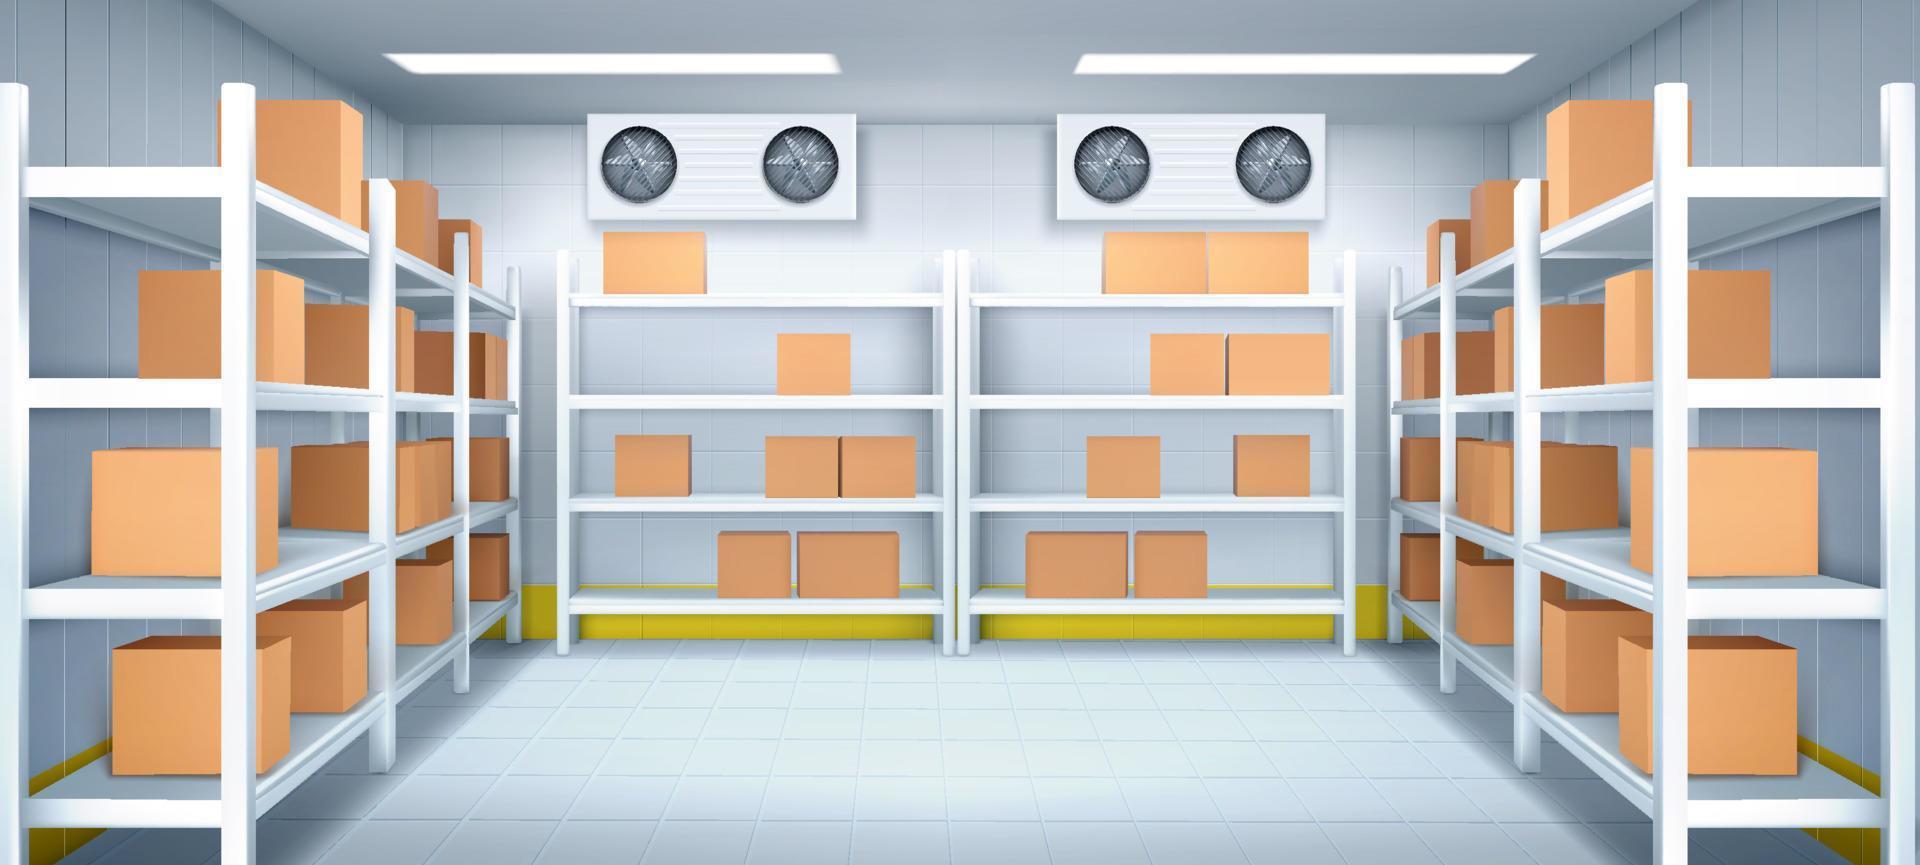 Warehouse interior with carton boxes on racks vector